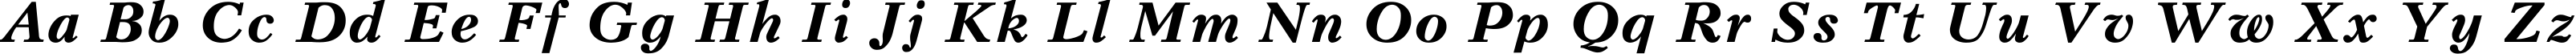 Пример написания английского алфавита шрифтом Peterburg Bold Italic